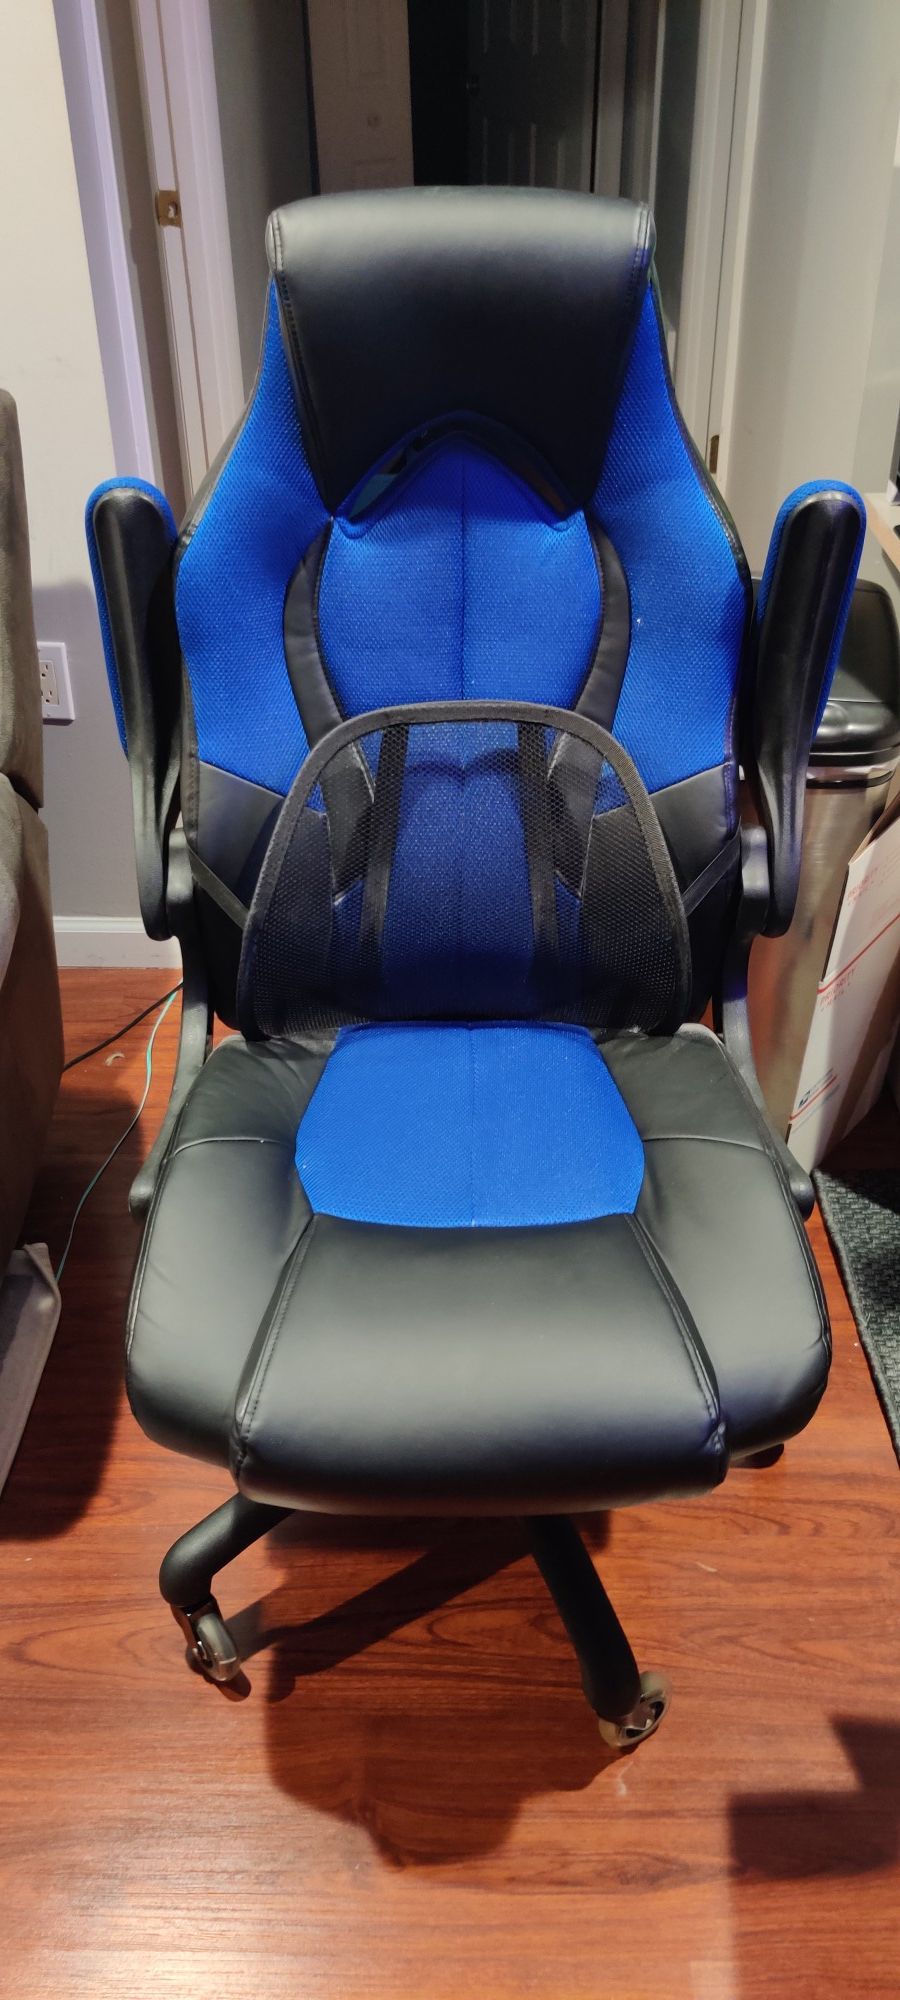 Staples Blue Gaming Chair - smoke & pet-free home